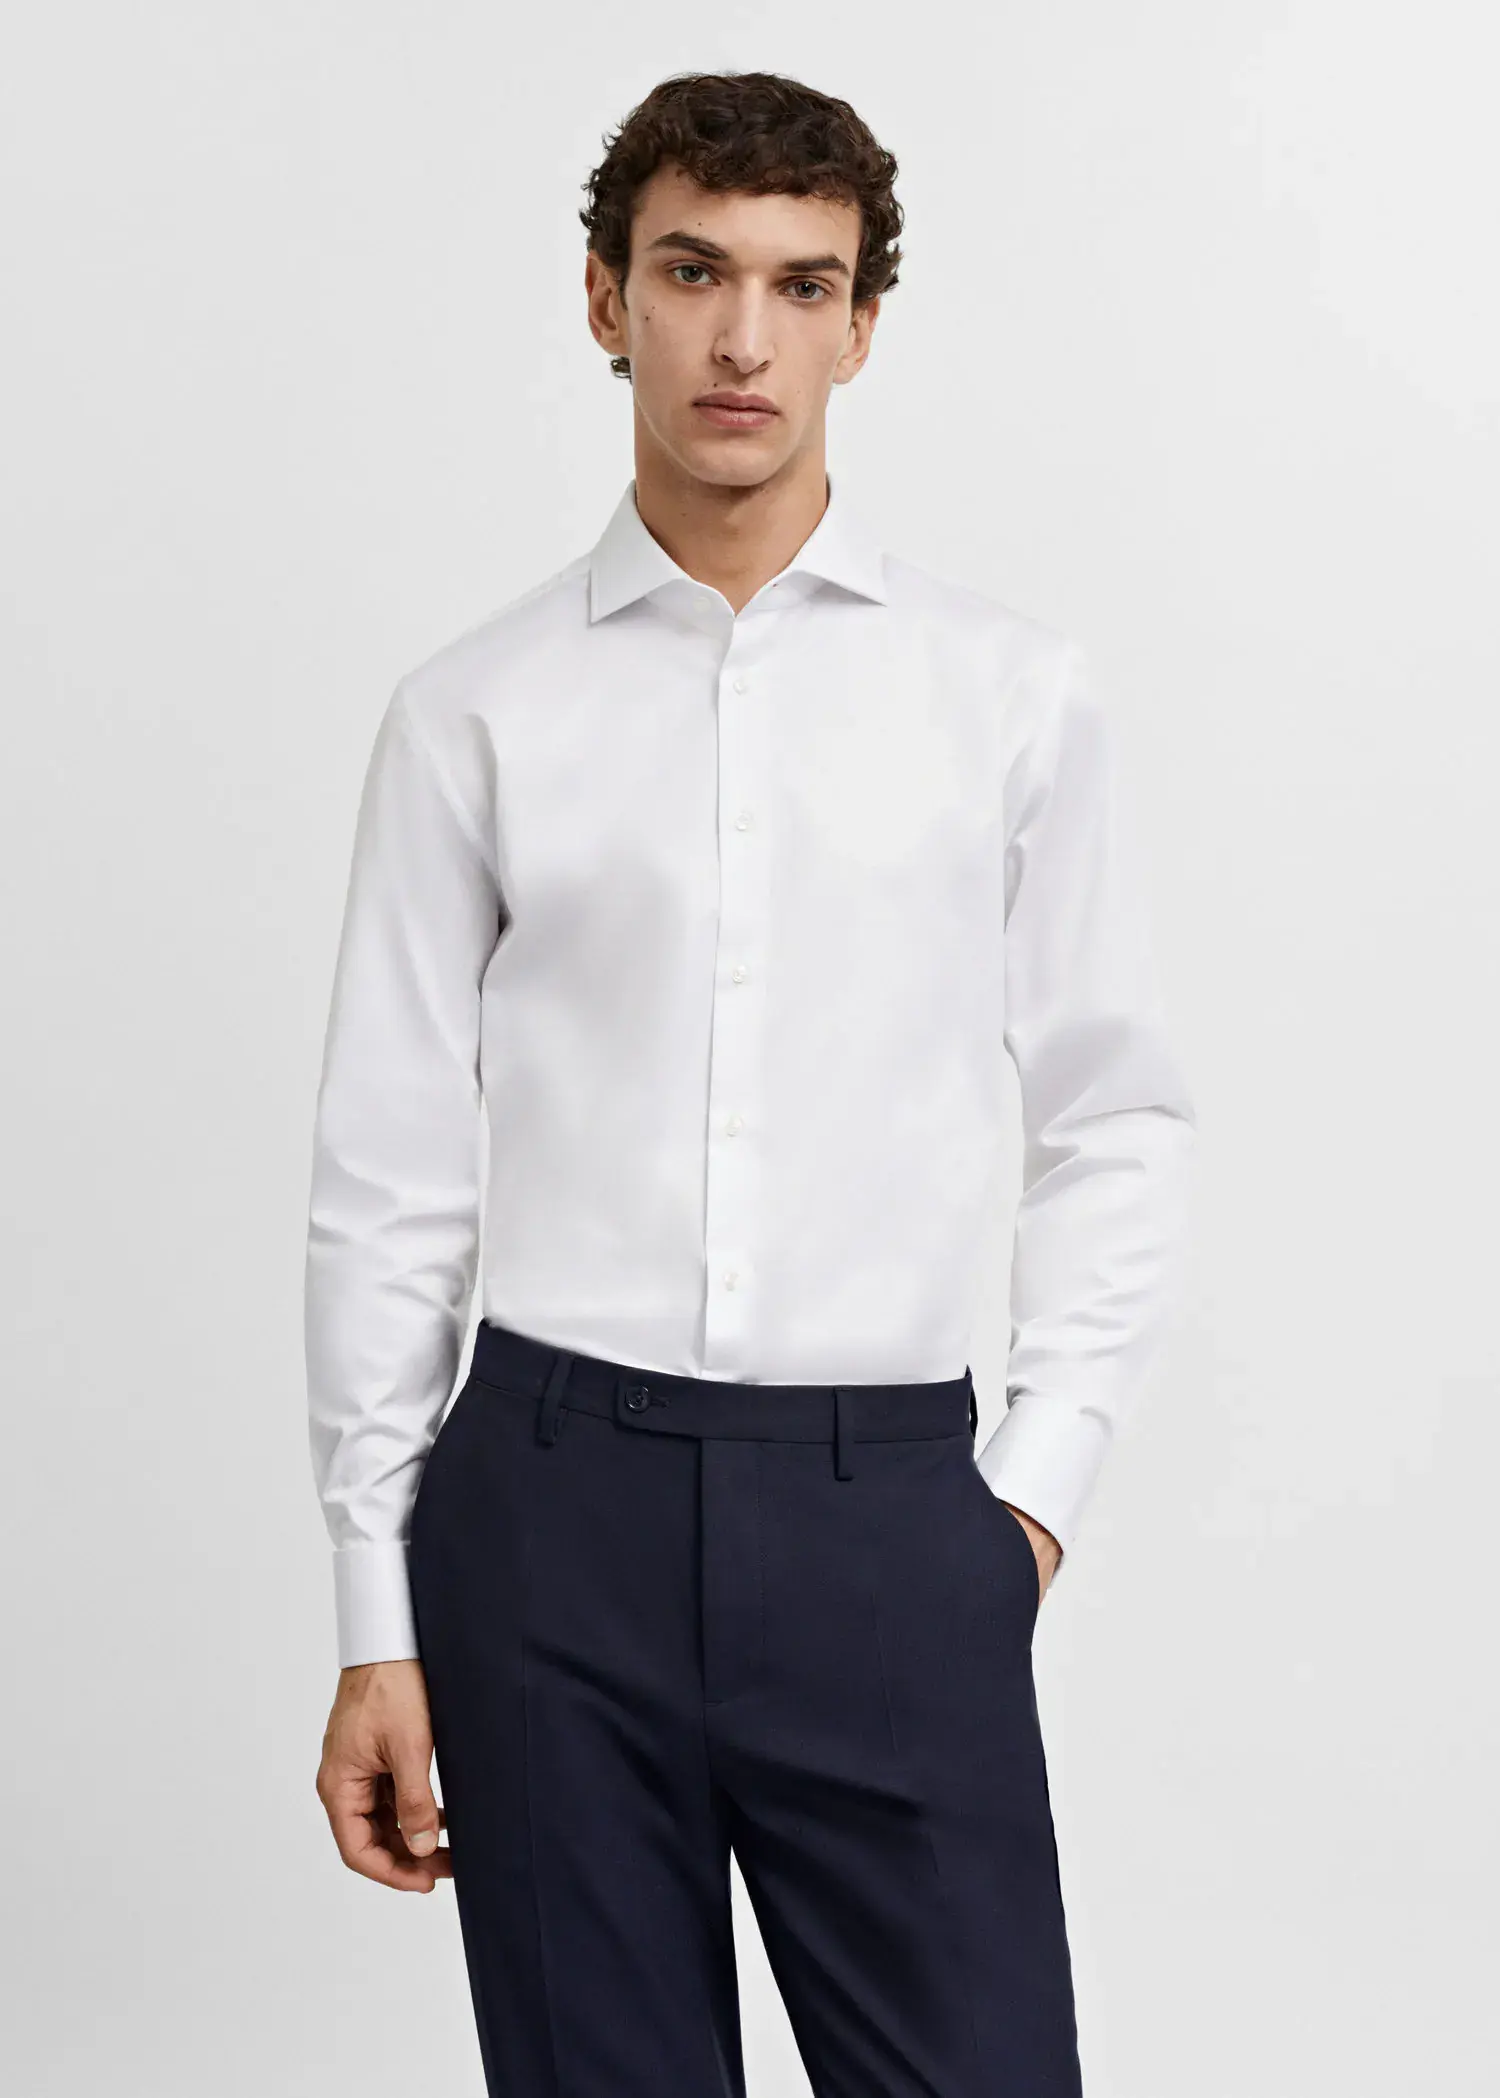 Mango Shirt cufflinks slim fit twill fabric suit. 1